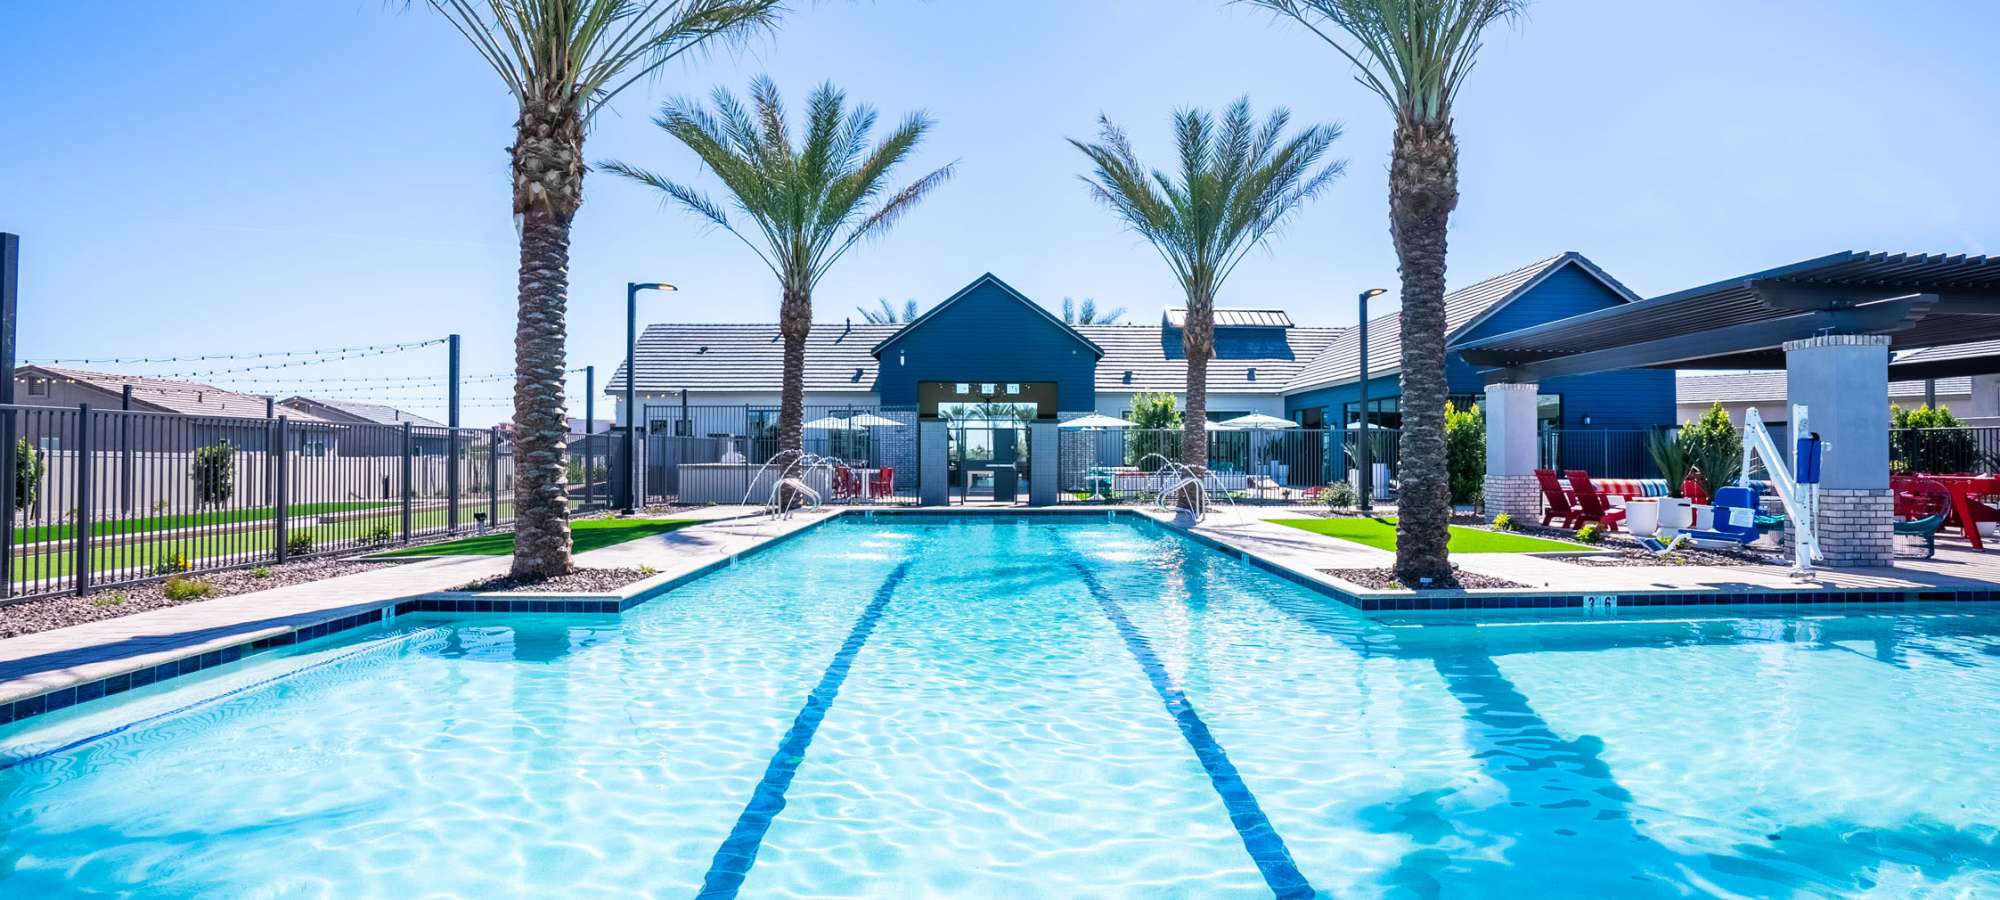 Gorgeous swimming pool at FirstStreet Ballpark Village in Goodyear, Arizona